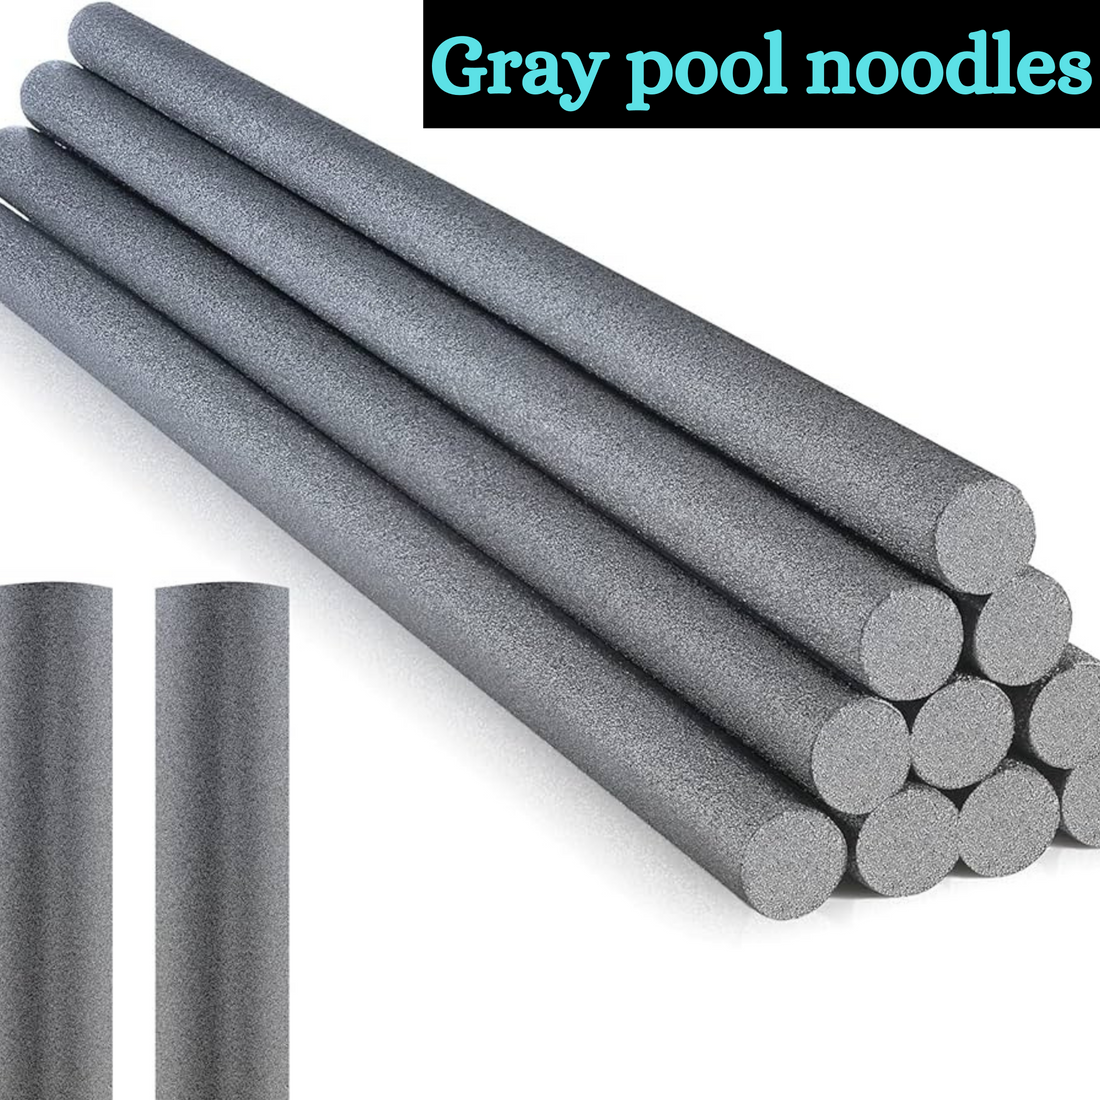 Gray pool noodles